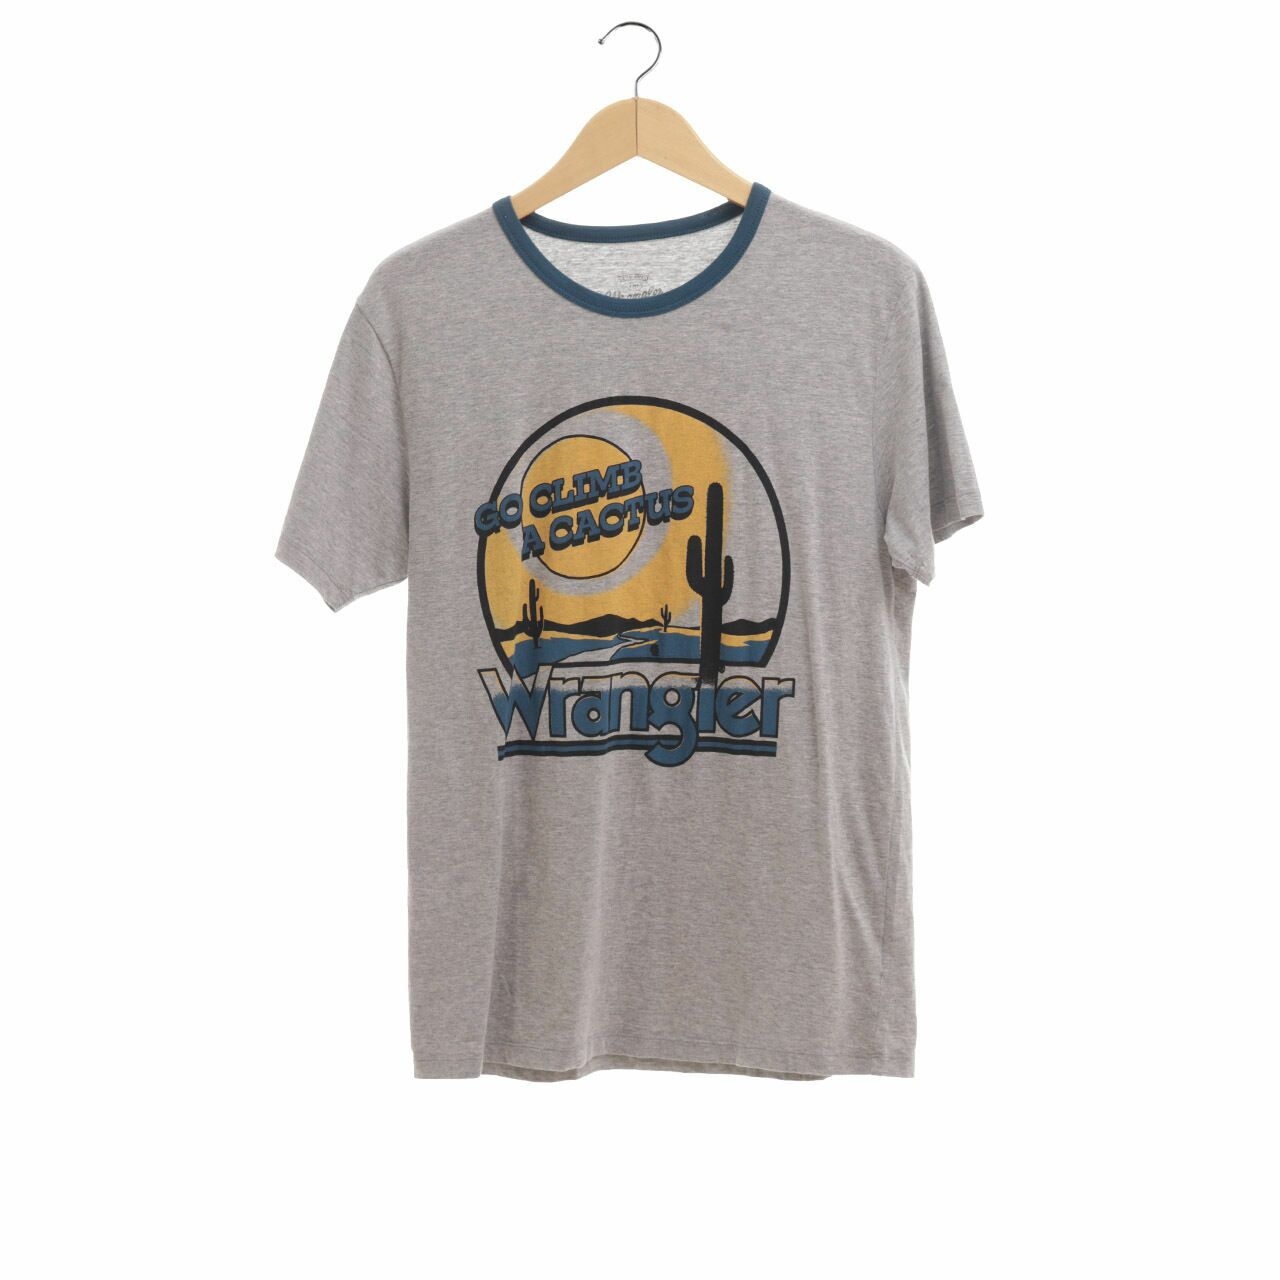 Wrangler Grey T-Shirt